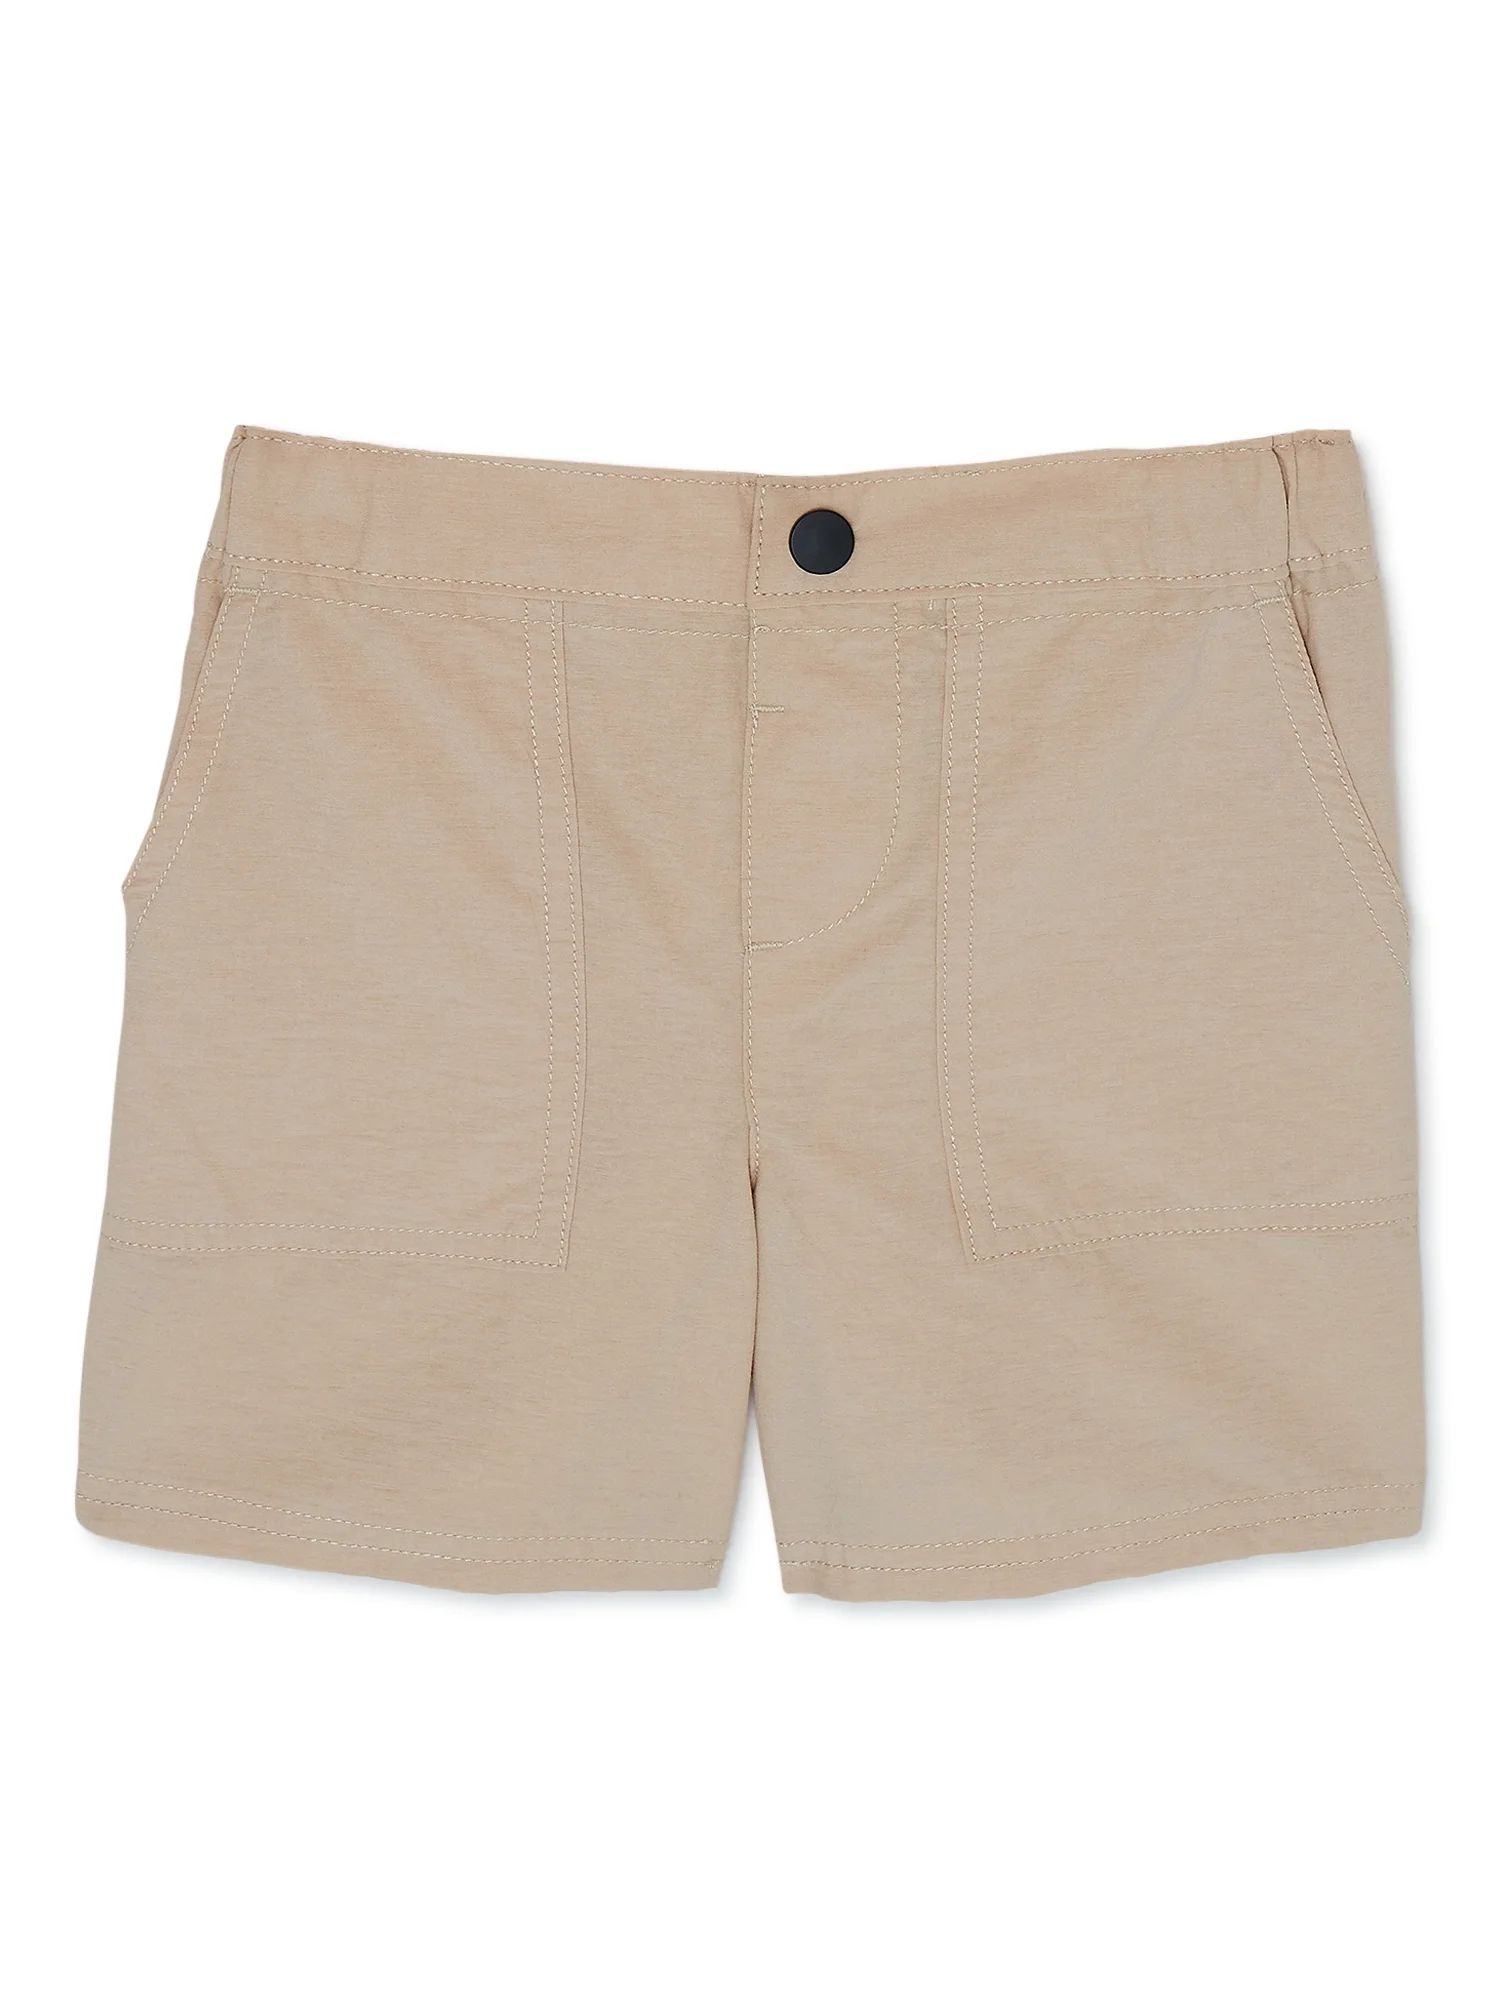 Garanimals Toddler Boy Tech Woven Shorts, Sizes 12M-5T | Walmart (US)